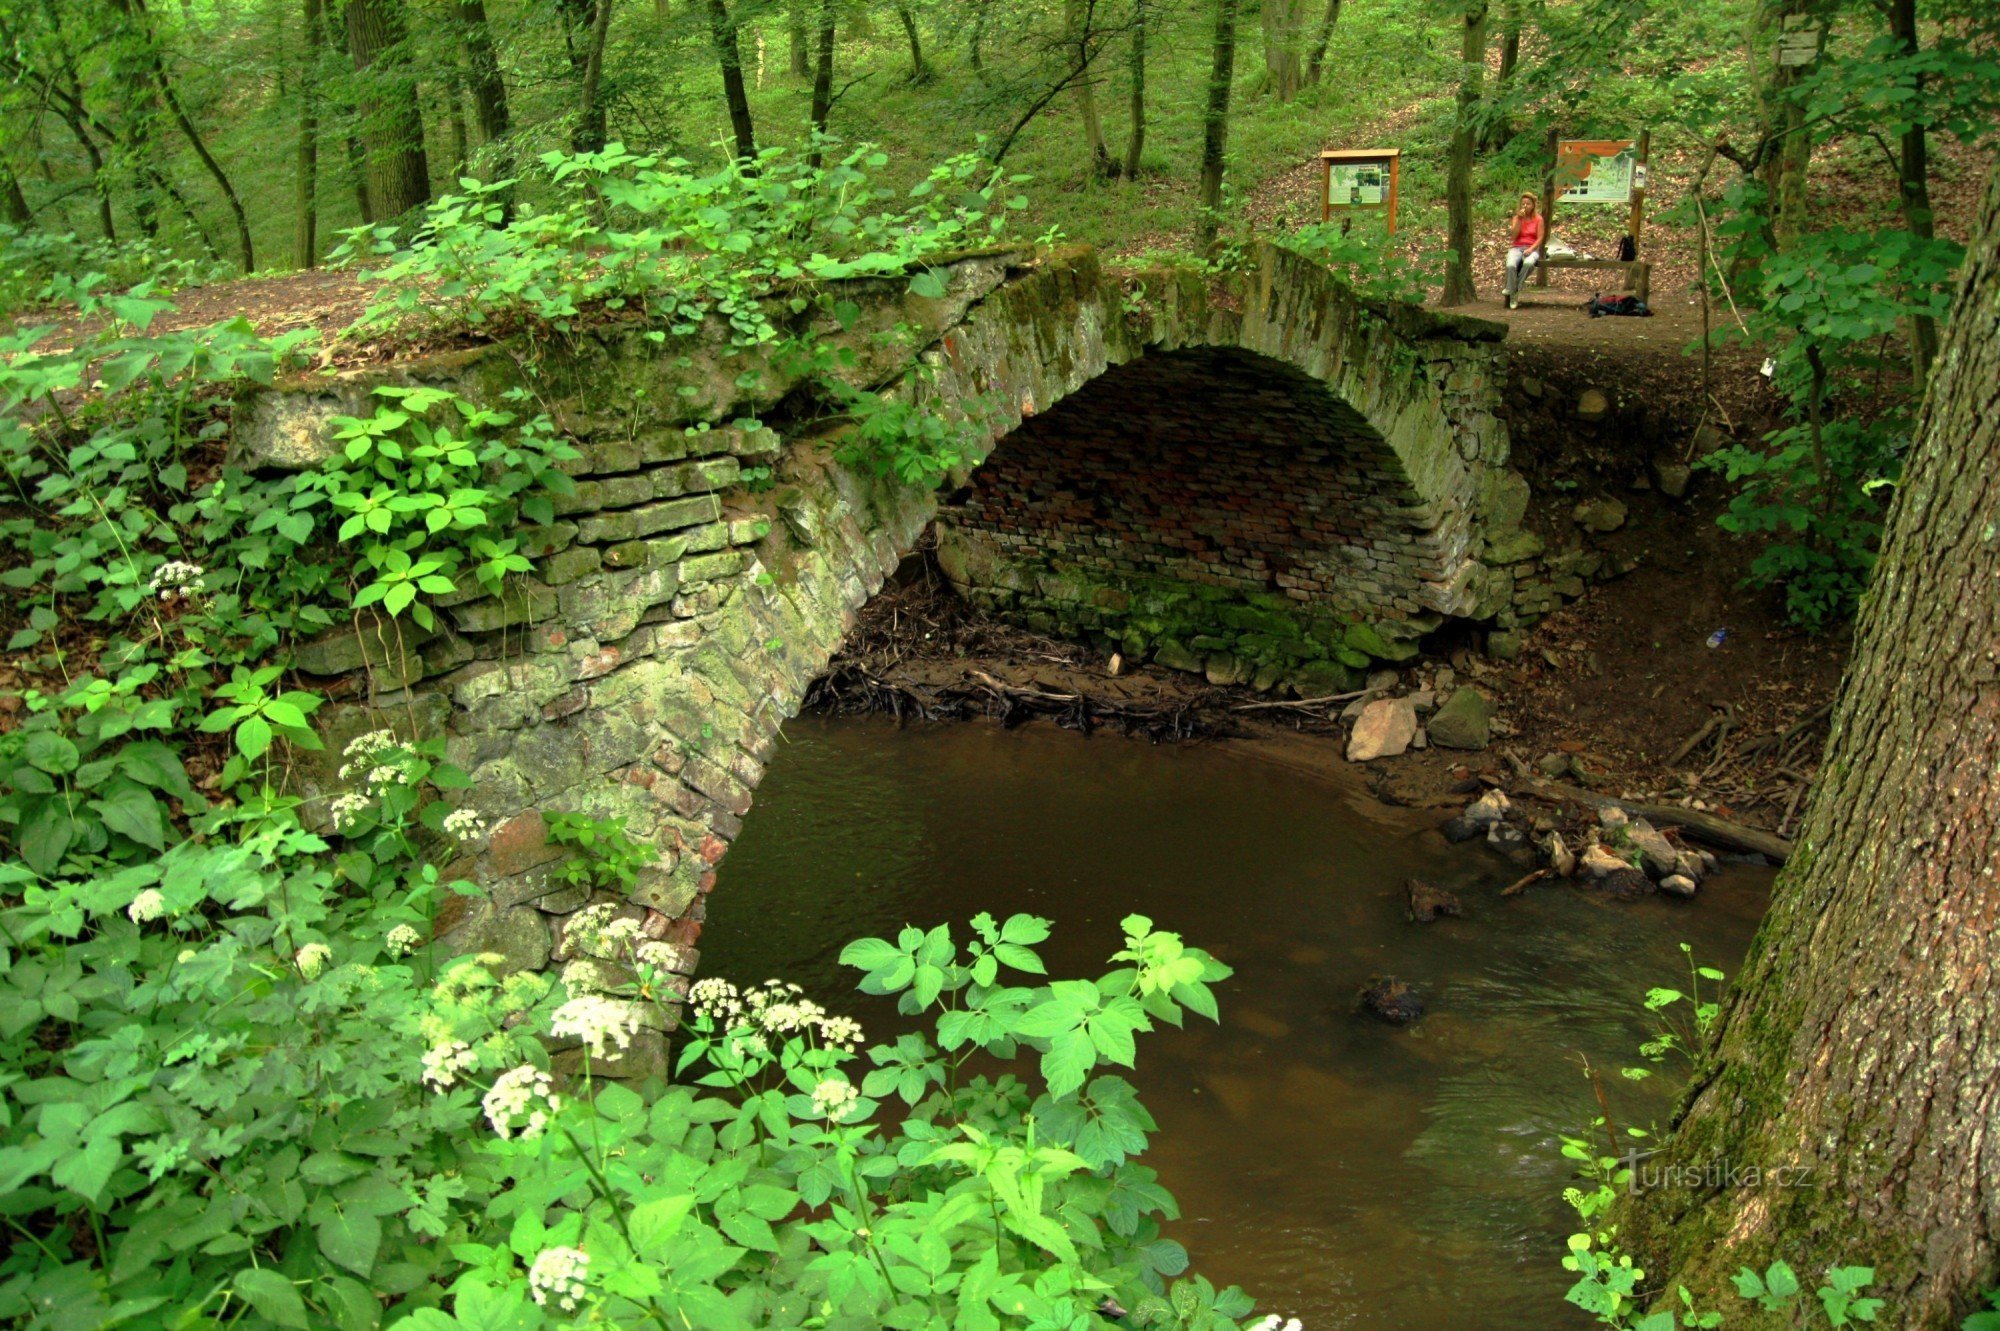 The bridge at Spáleného Mlýn in the Bobrava valley